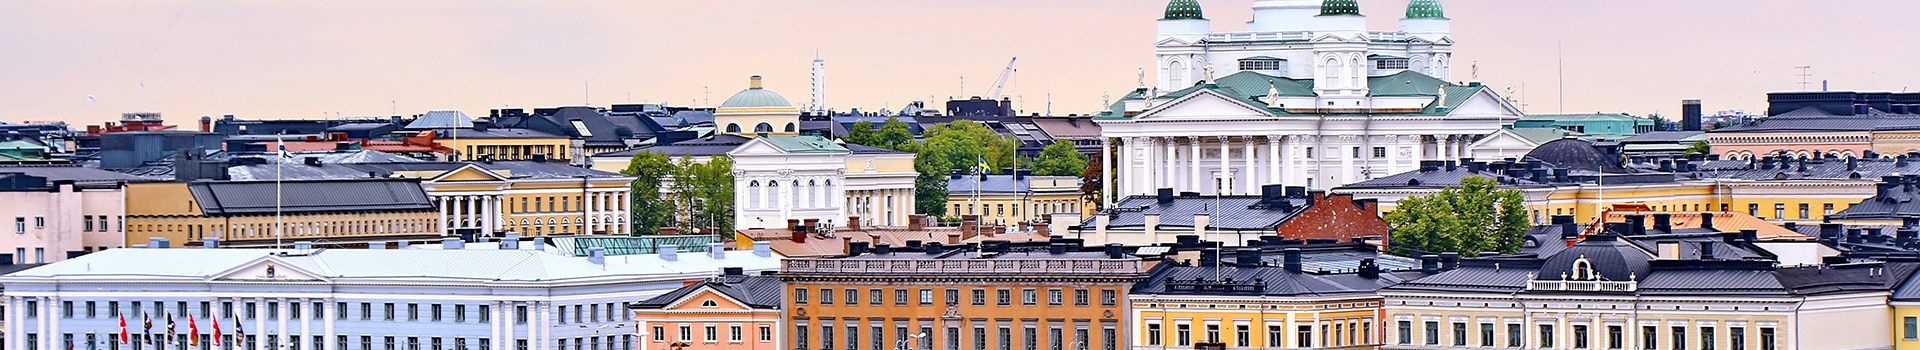 Mosca - Helsinki-vantaa